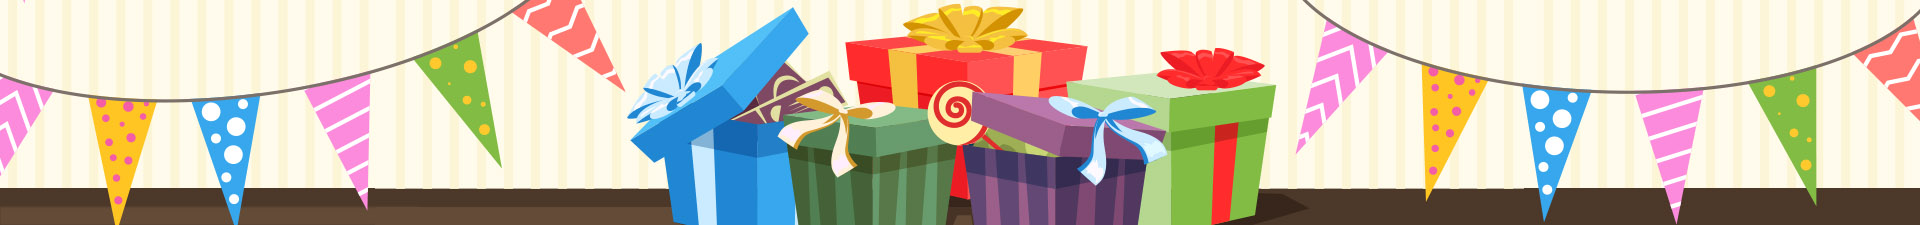 Articole de cadouri pentru copii en-gros online